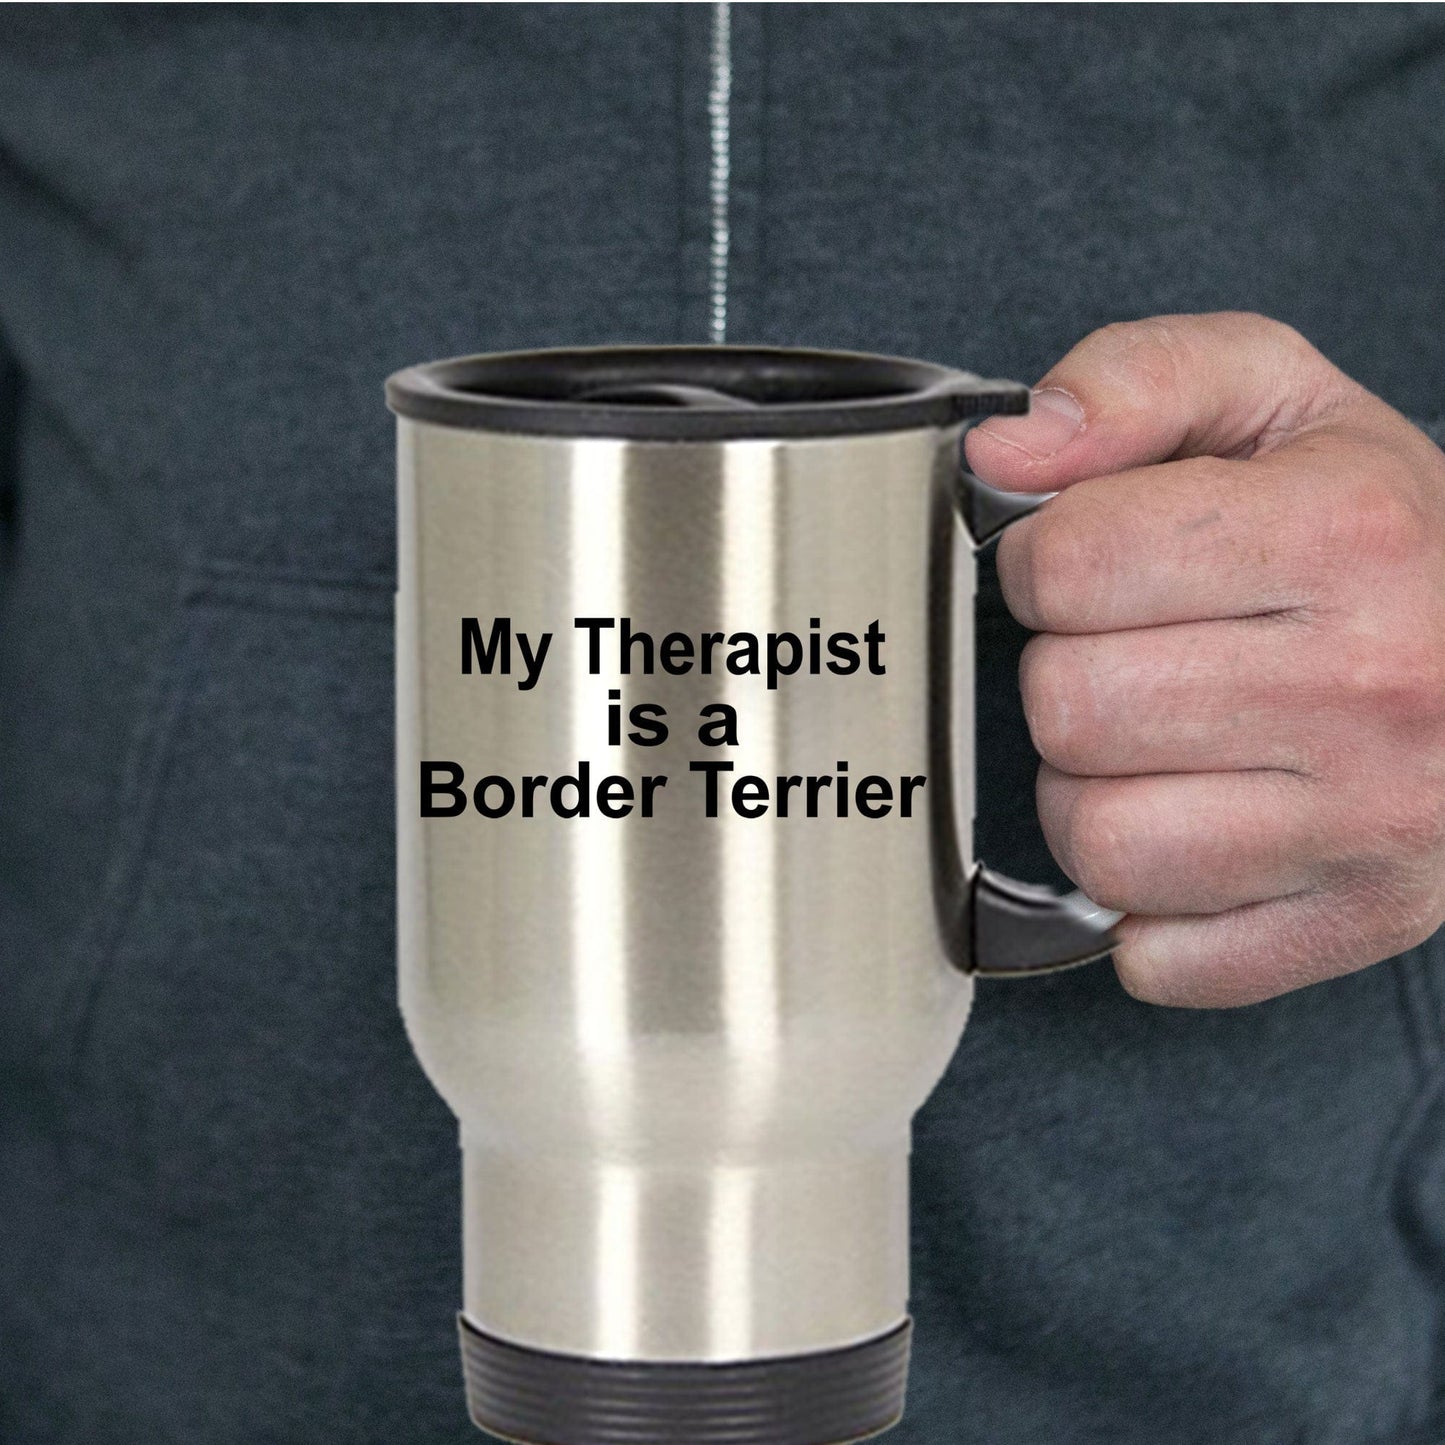 Border Terrier Therapist Travel Coffee Mug